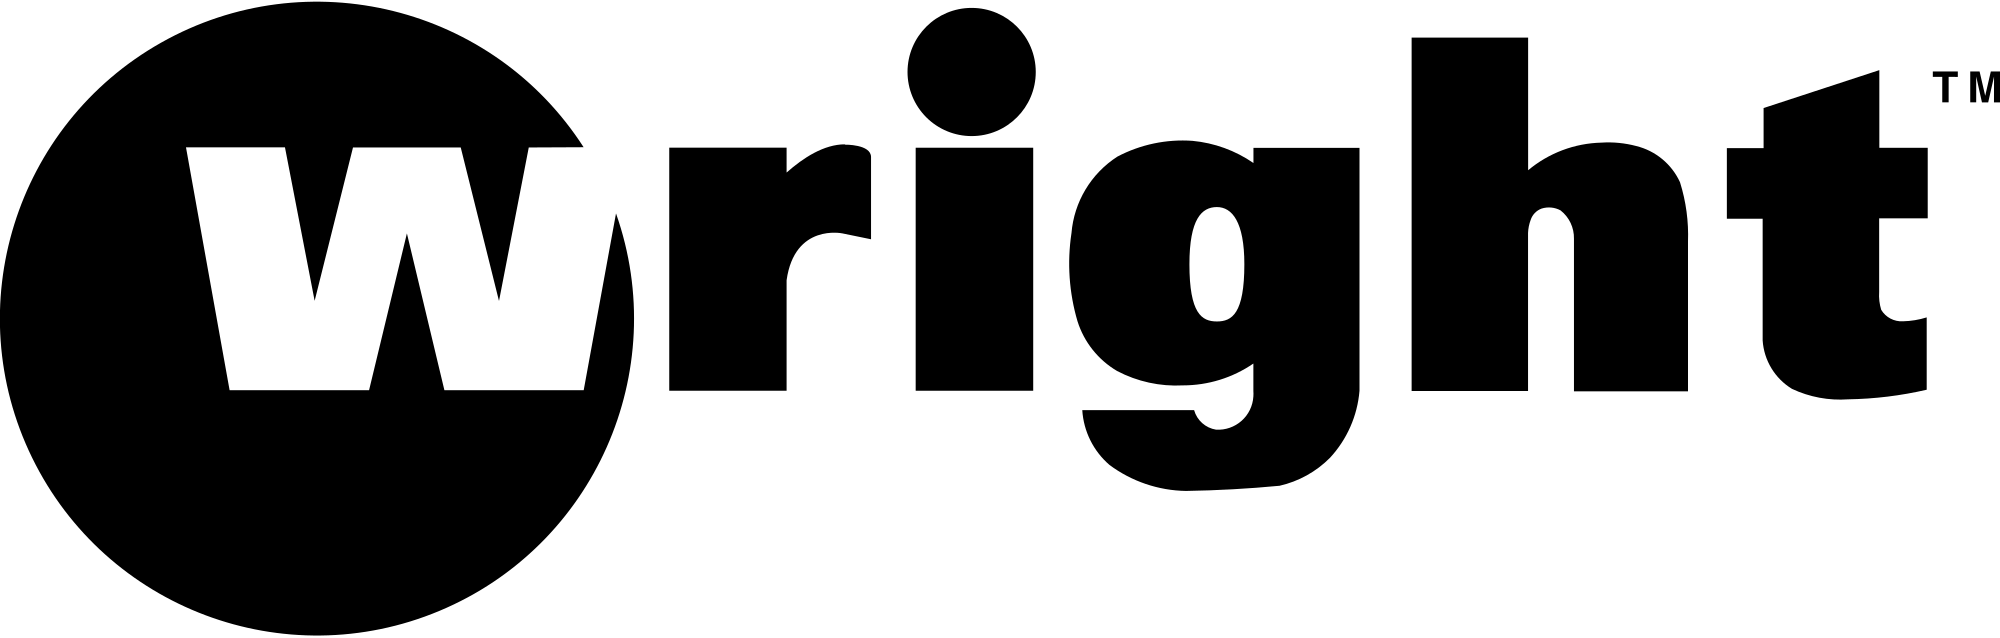 Wright Logo - Wright Logo.svg